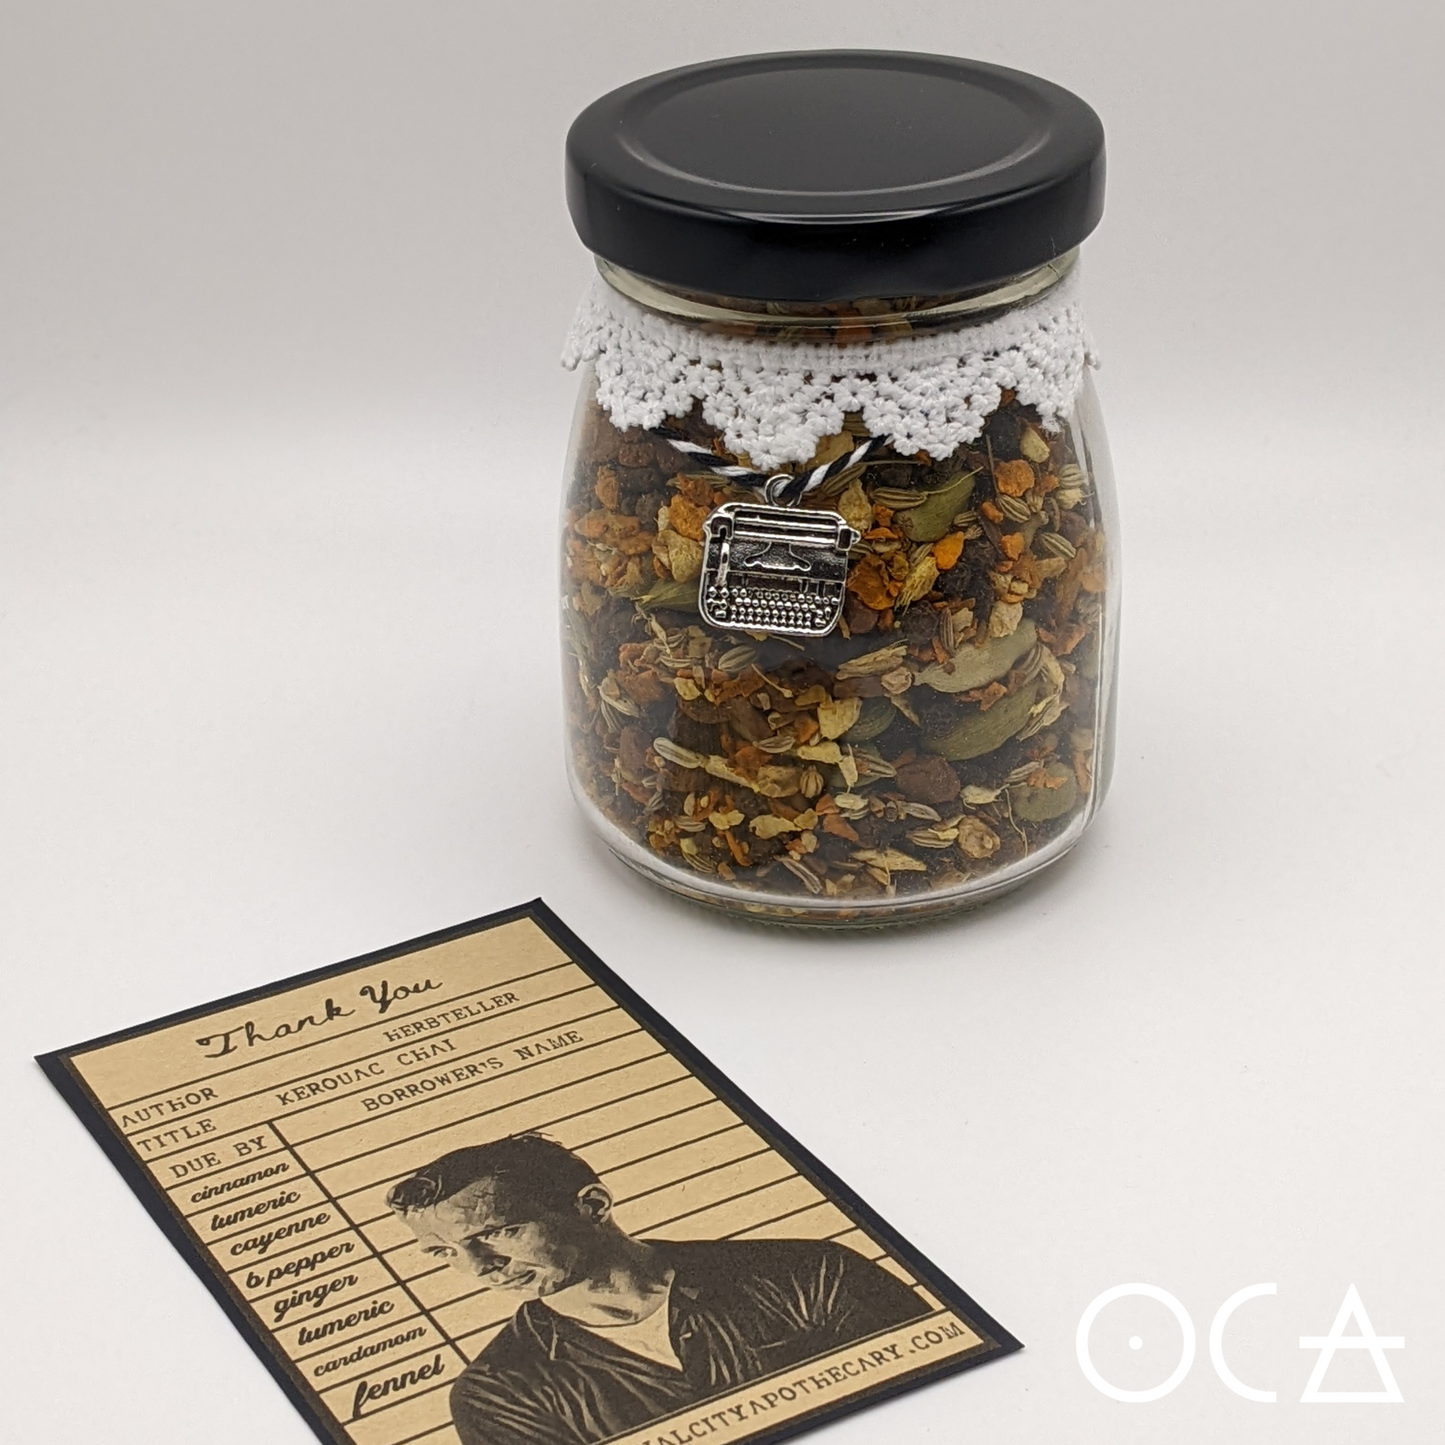 Kerouac Chai Tea (Herbmusement/Tea Gift Set)